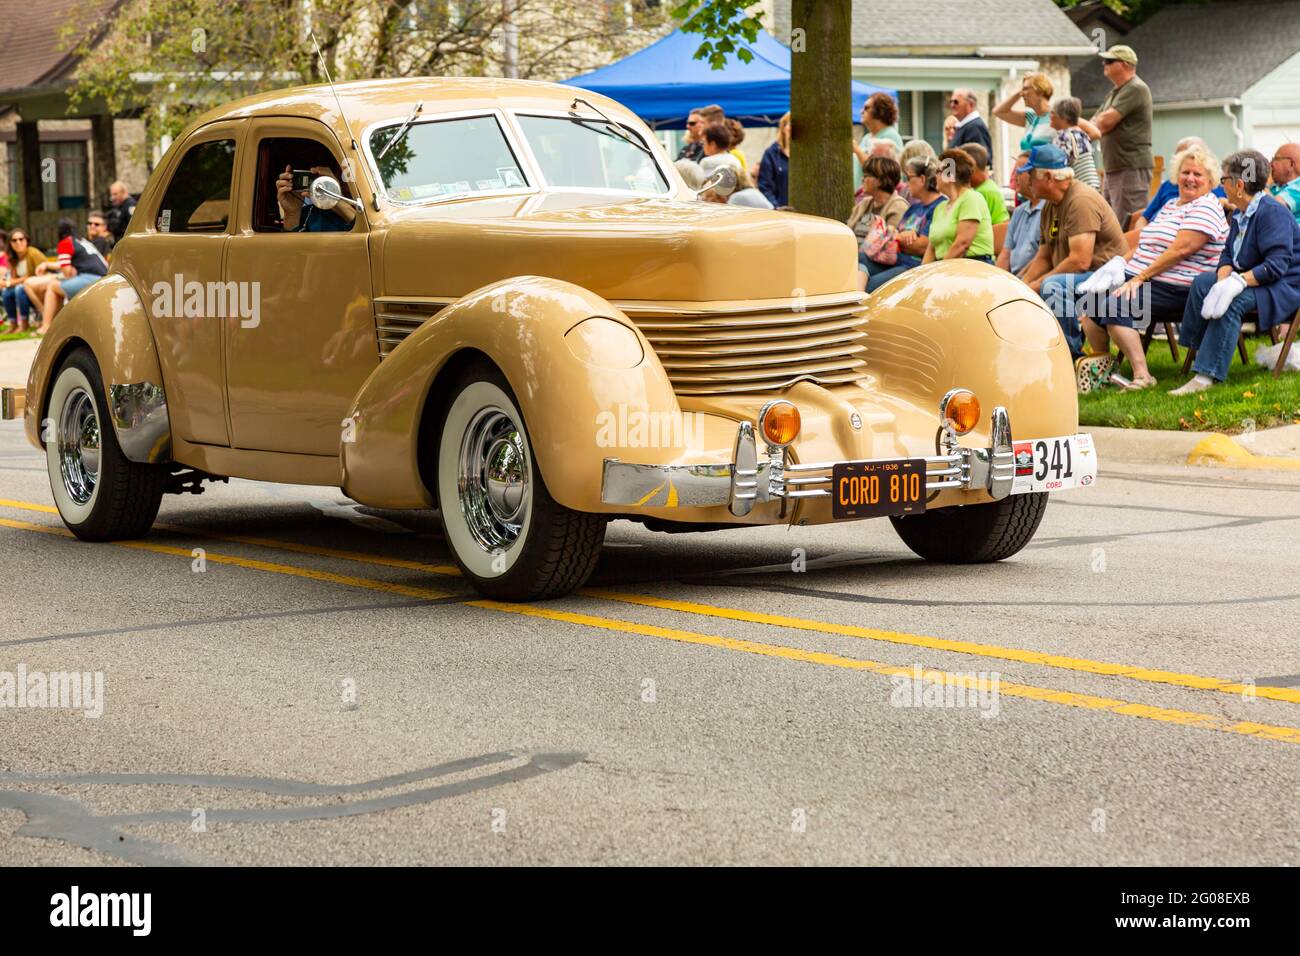 A yellow 1936 Cord 810 sedan passes through Auburn, Indiana during the 2019 Auburn Cord Duesenberg Festival Parade. Stock Photo